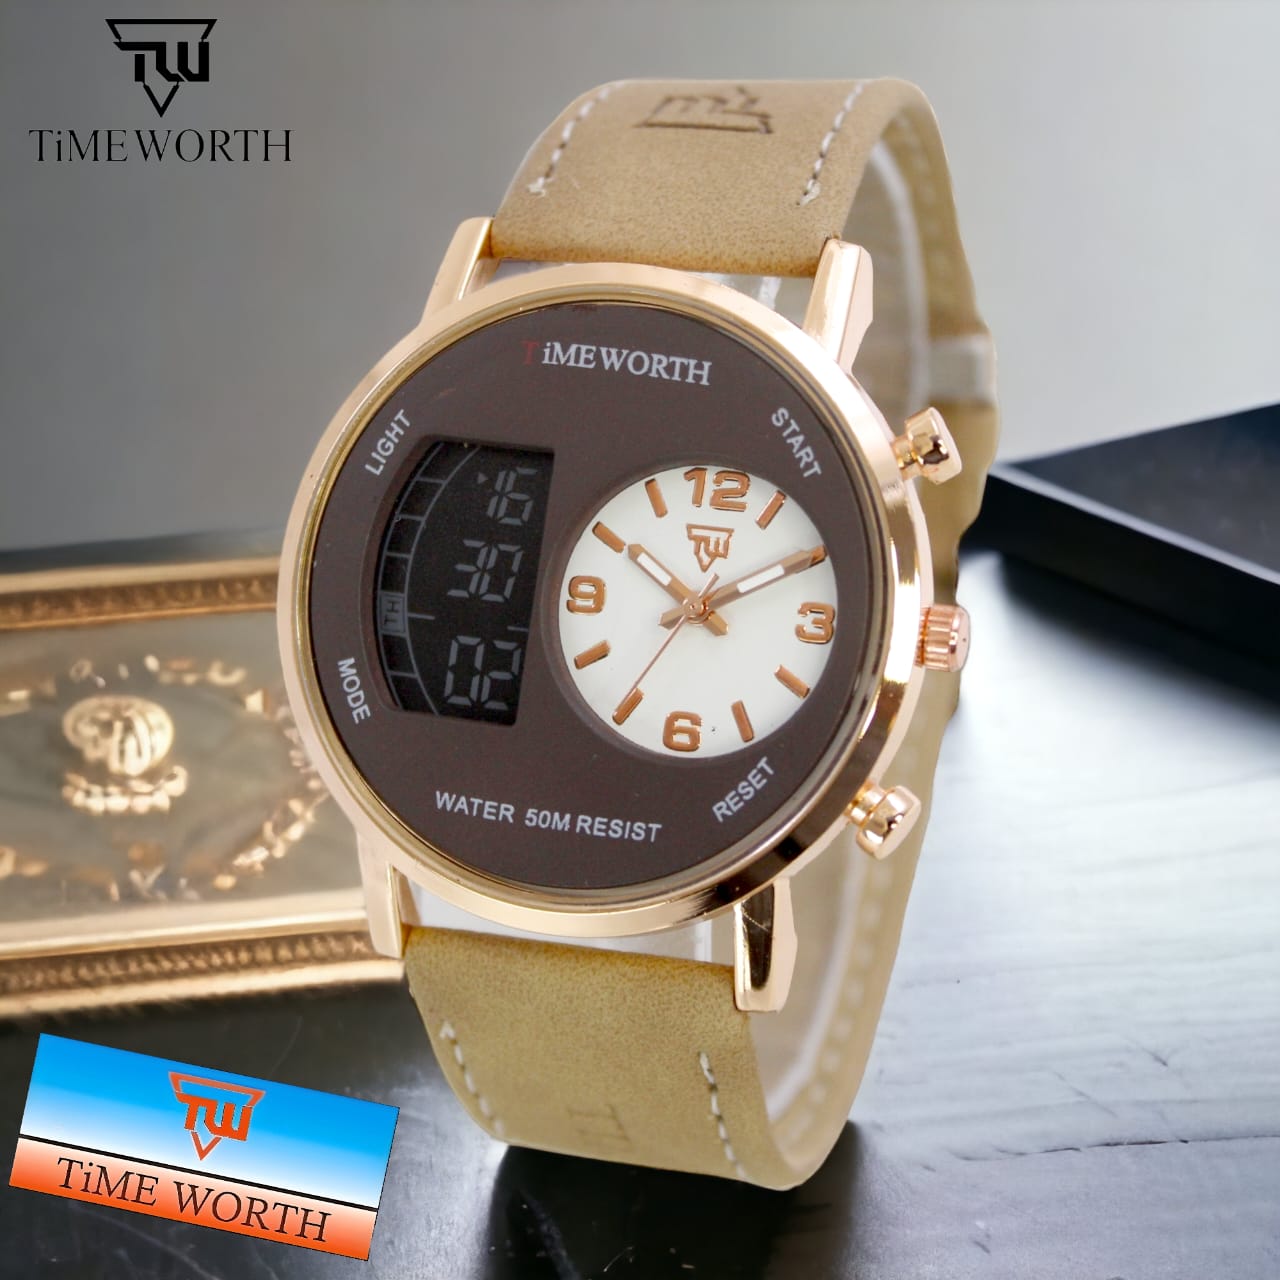 Timeworth Round Dial Stylish Watch